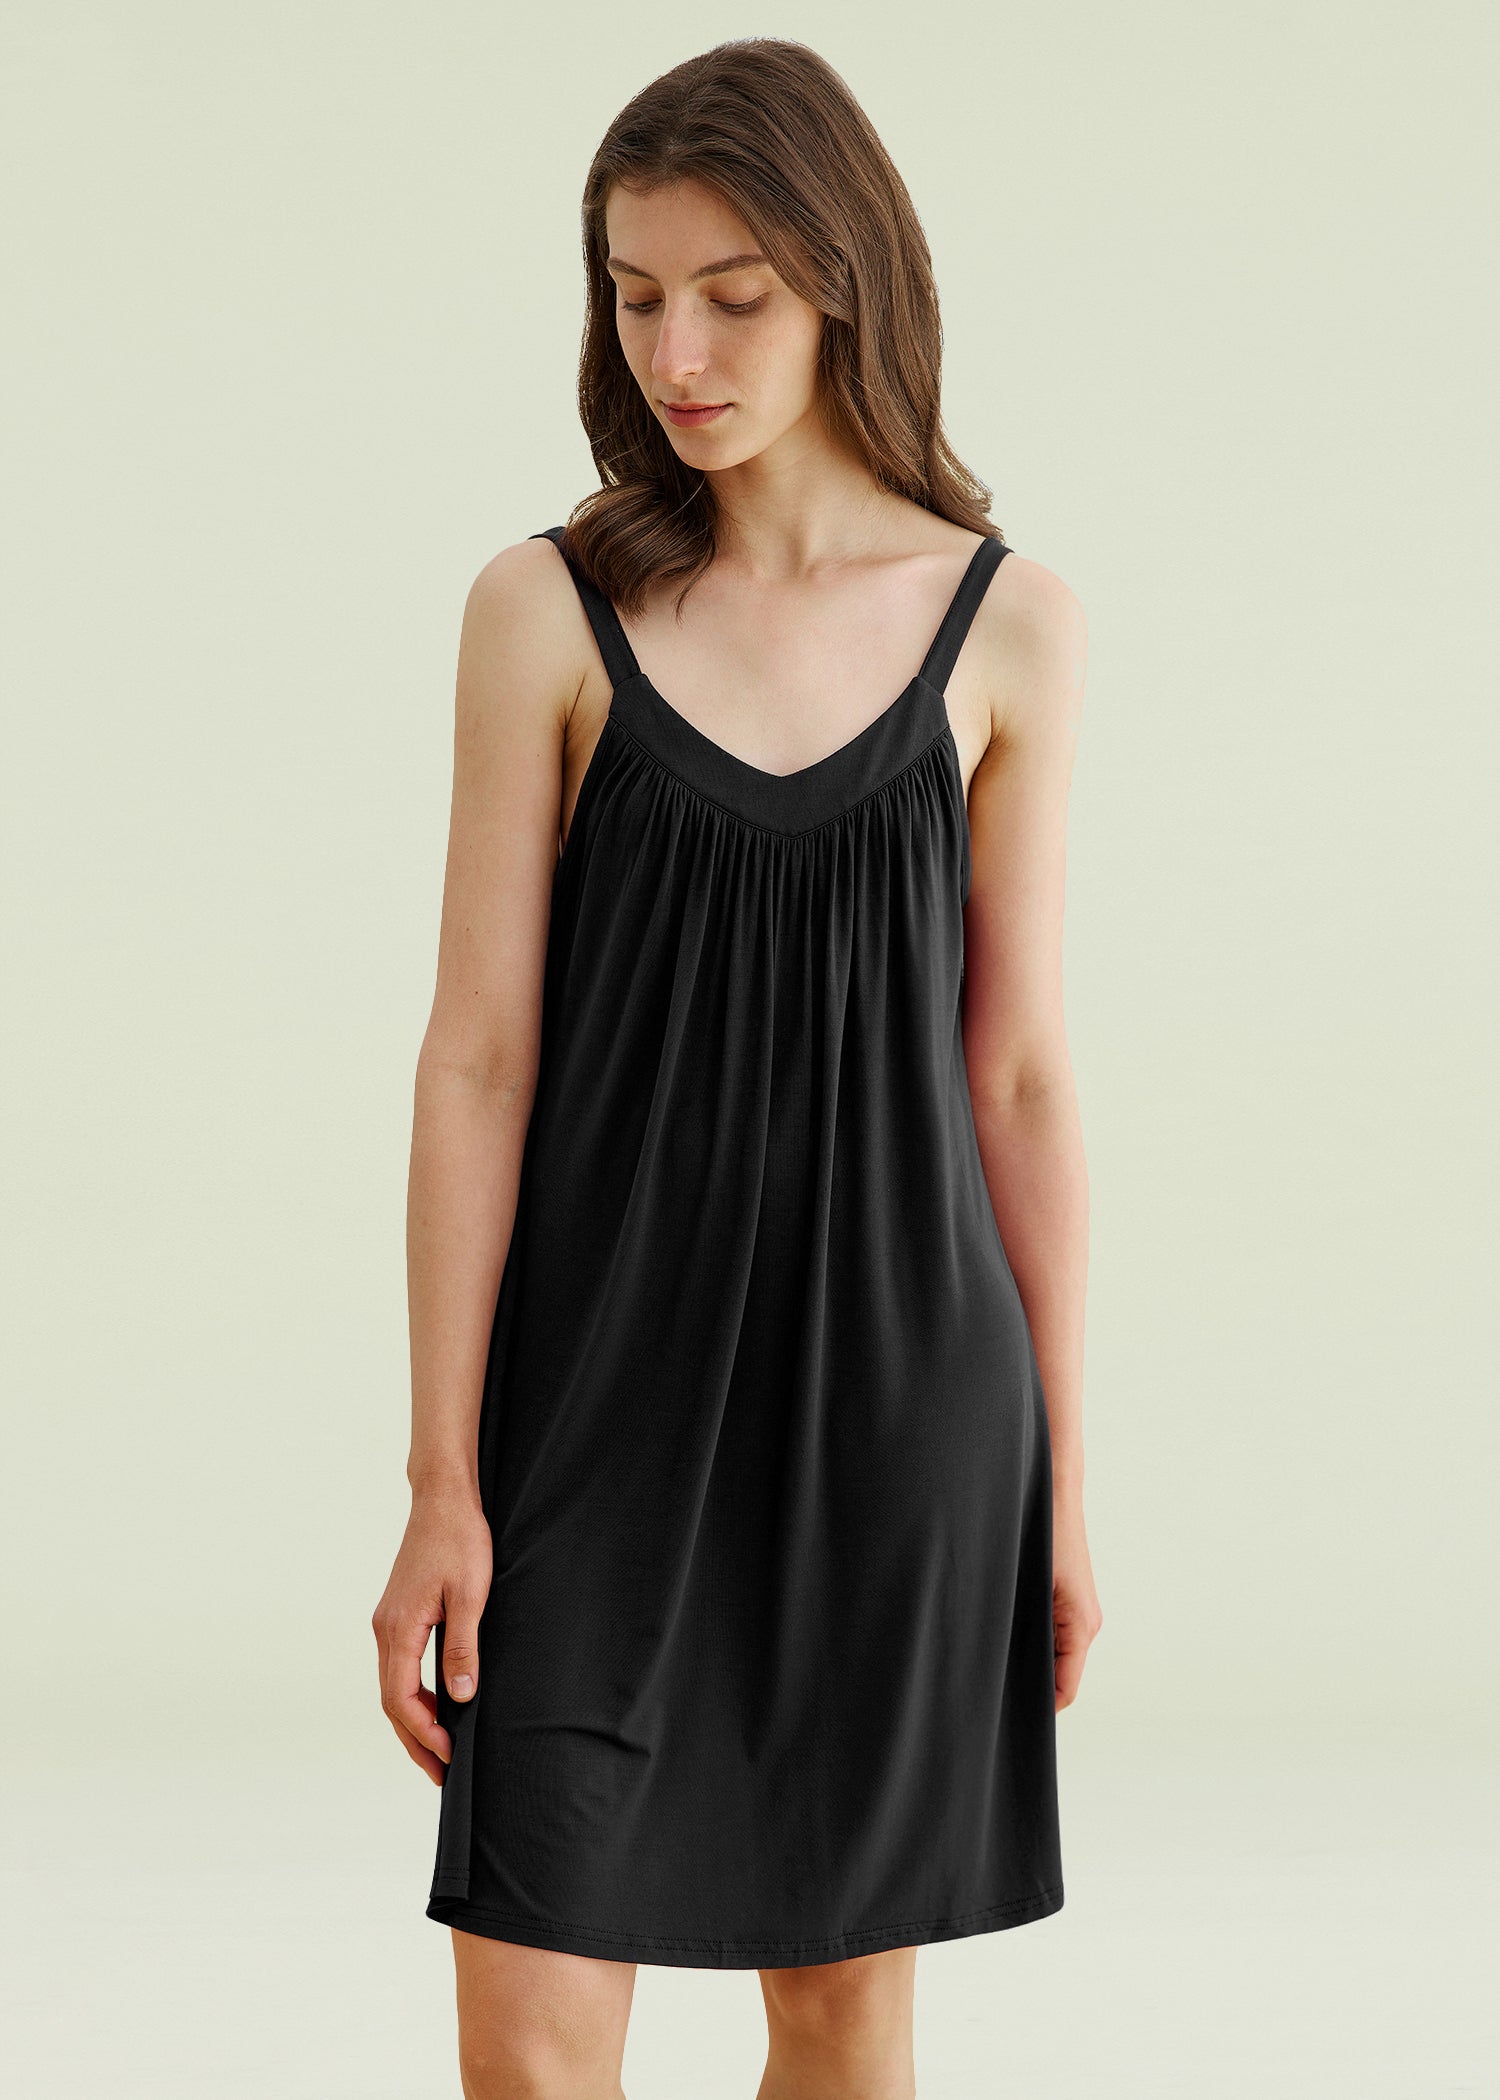 Women's Sleeveless Nightgowns & Nightshirts